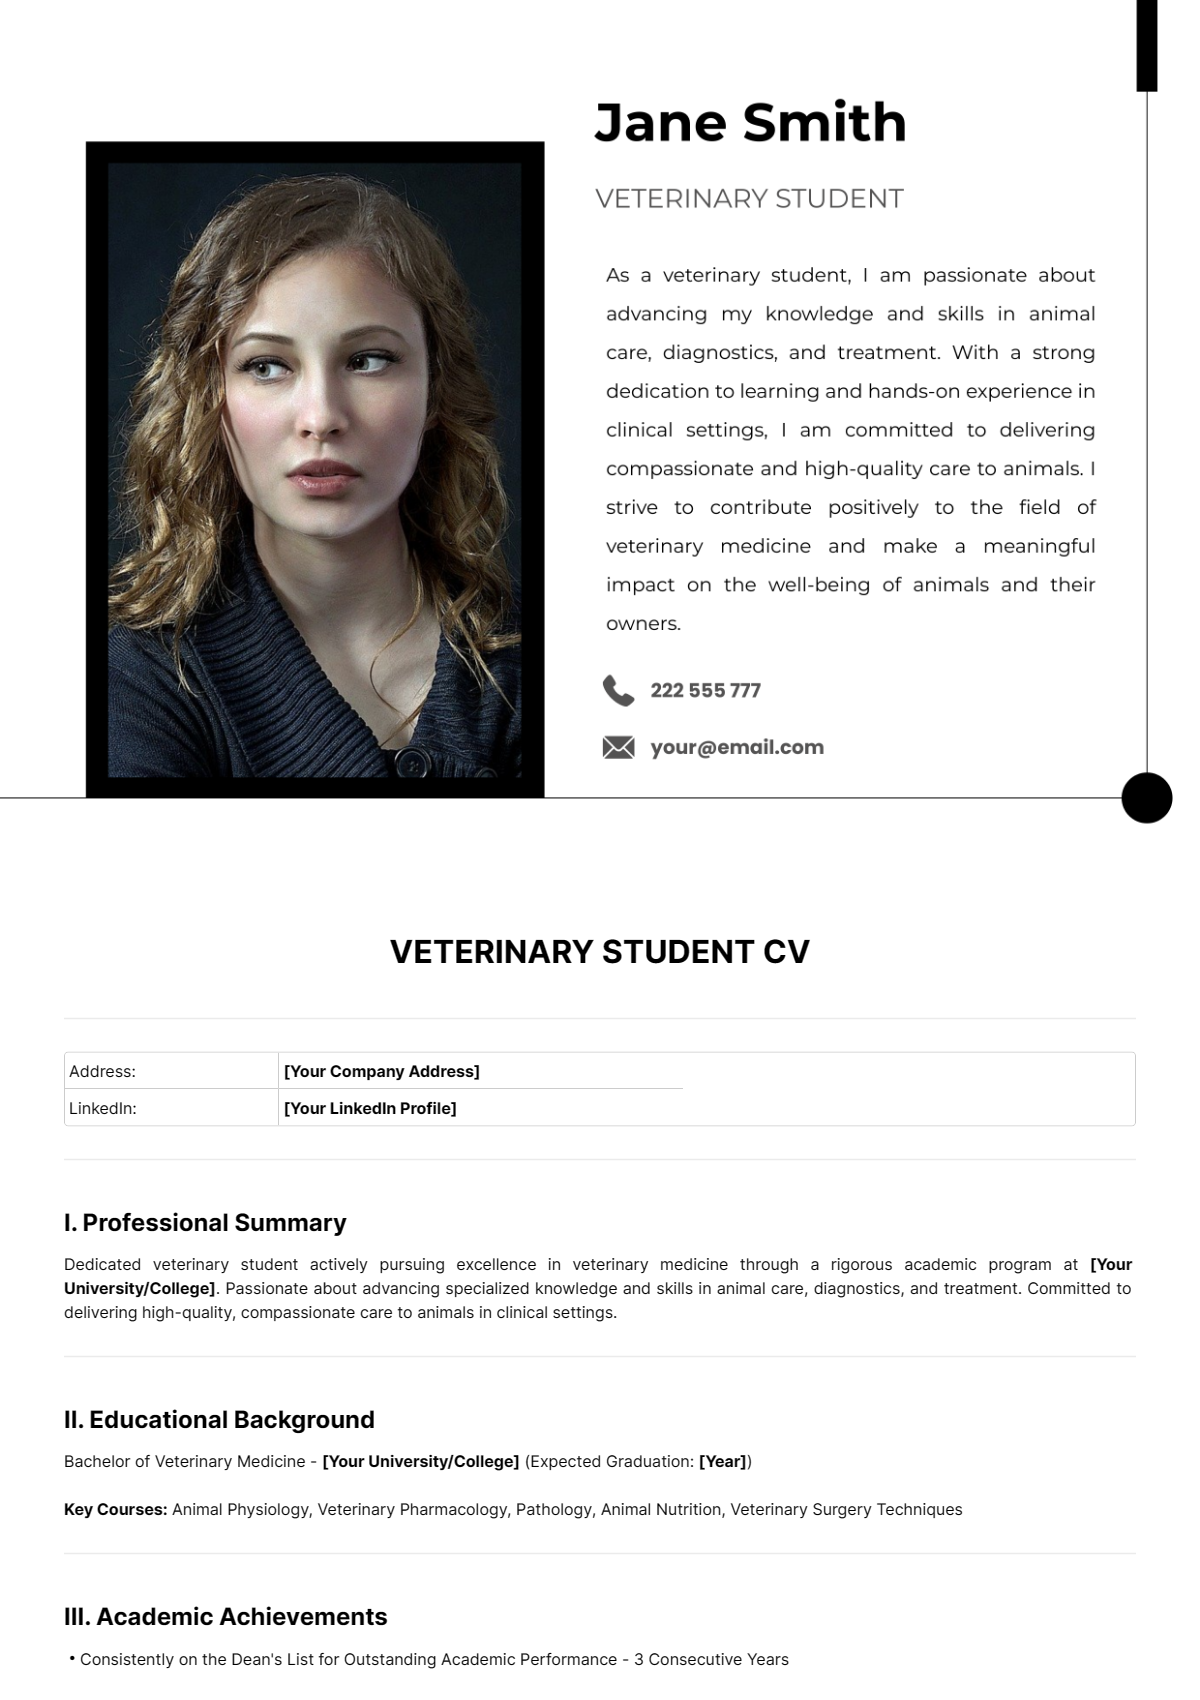 Veterinary Student CV Template